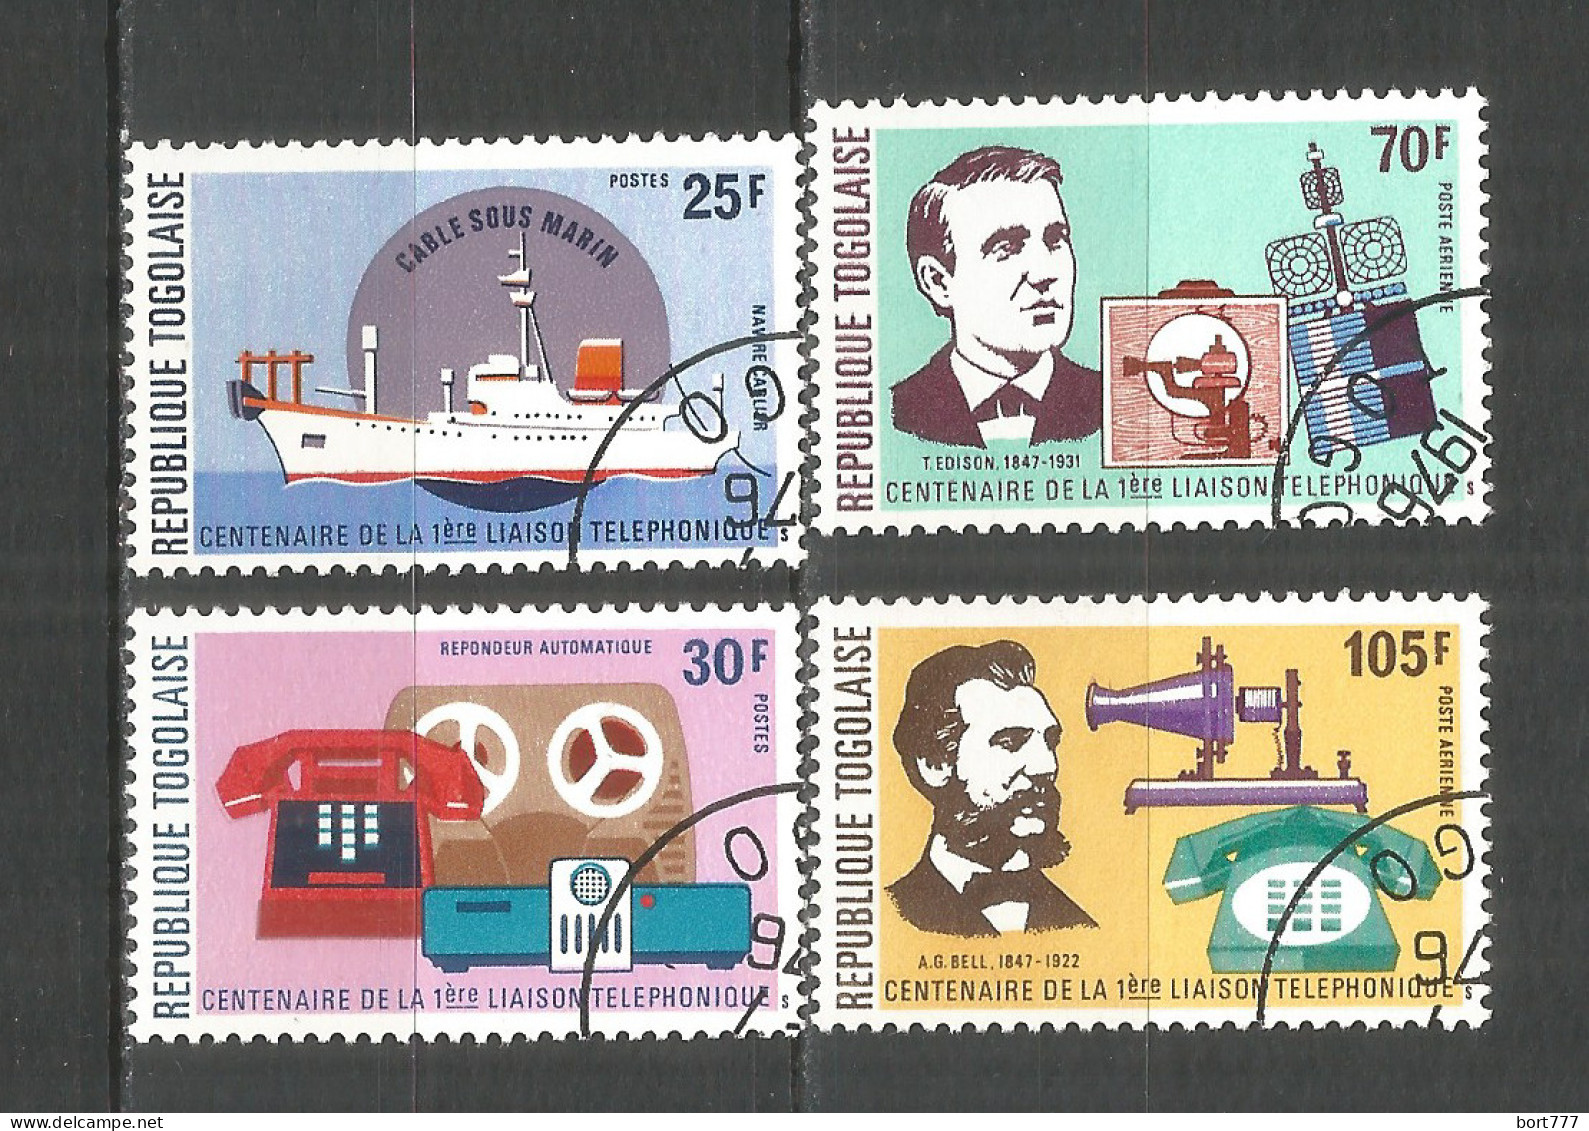 Togo 1978 Year, Set, Used Stamps (o) - Togo (1960-...)